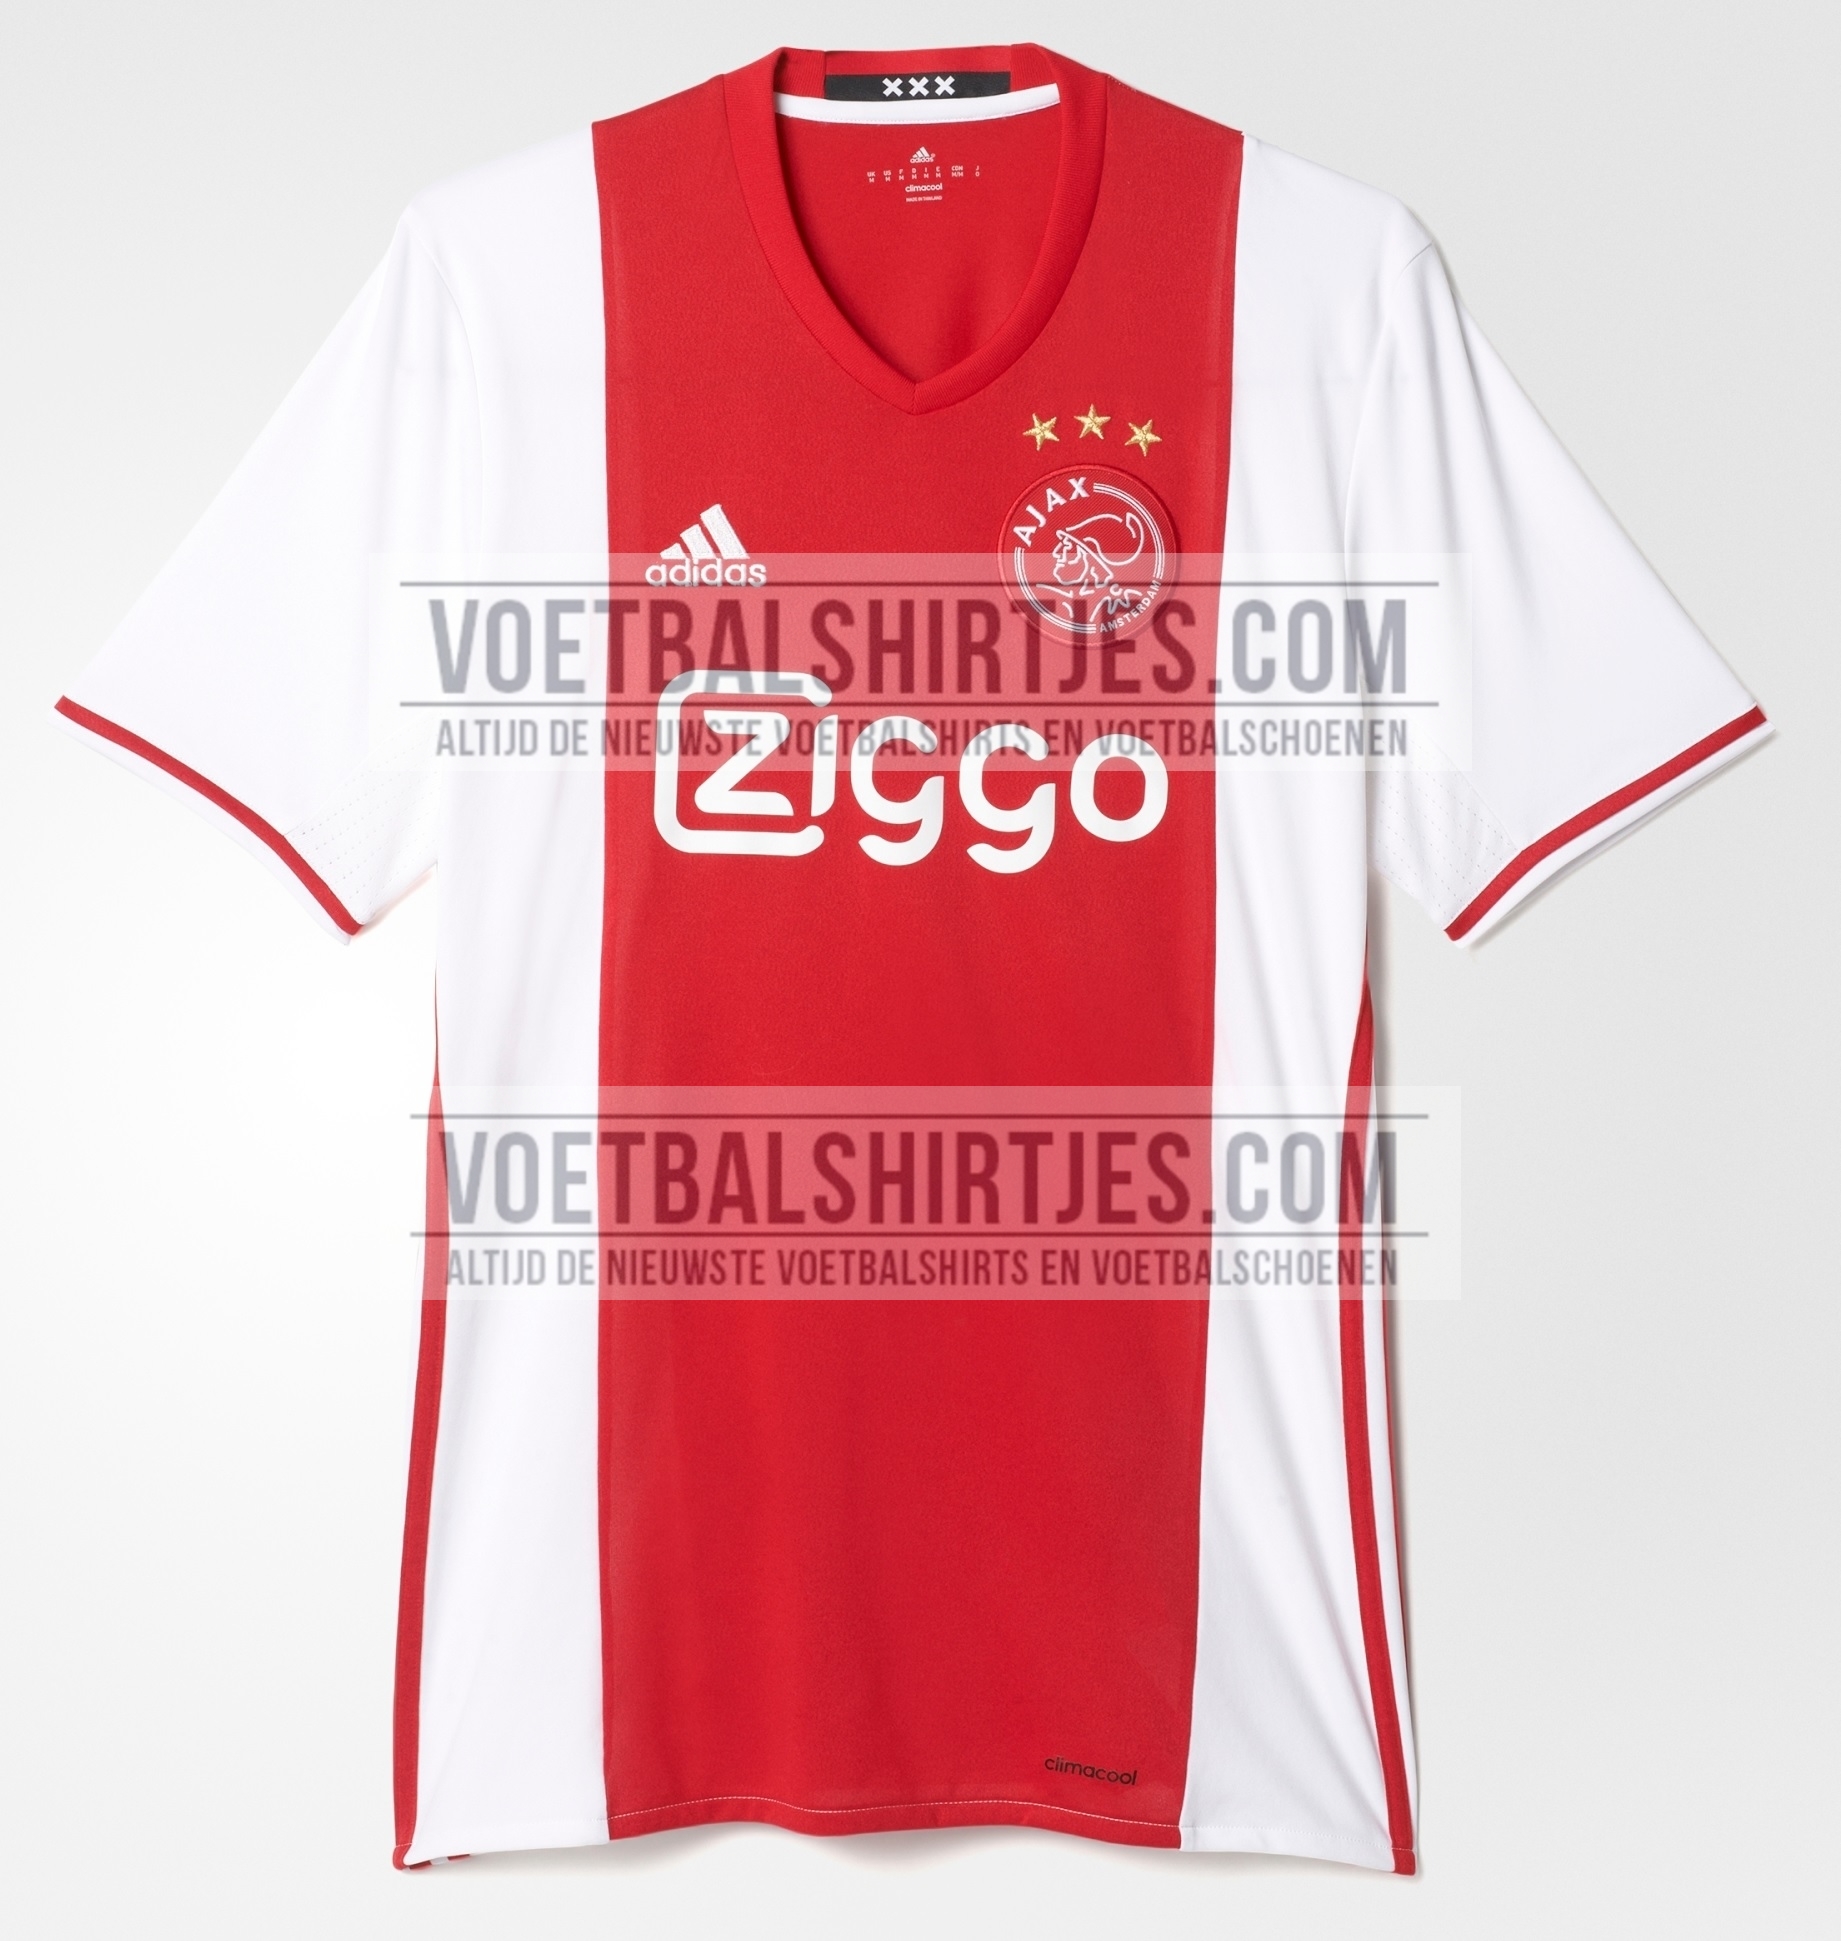 positie Blijkbaar Overleving Ajax shirt 2017 - Ajax thuisshirt 2017 - Ajax shirt 16/17 kopen